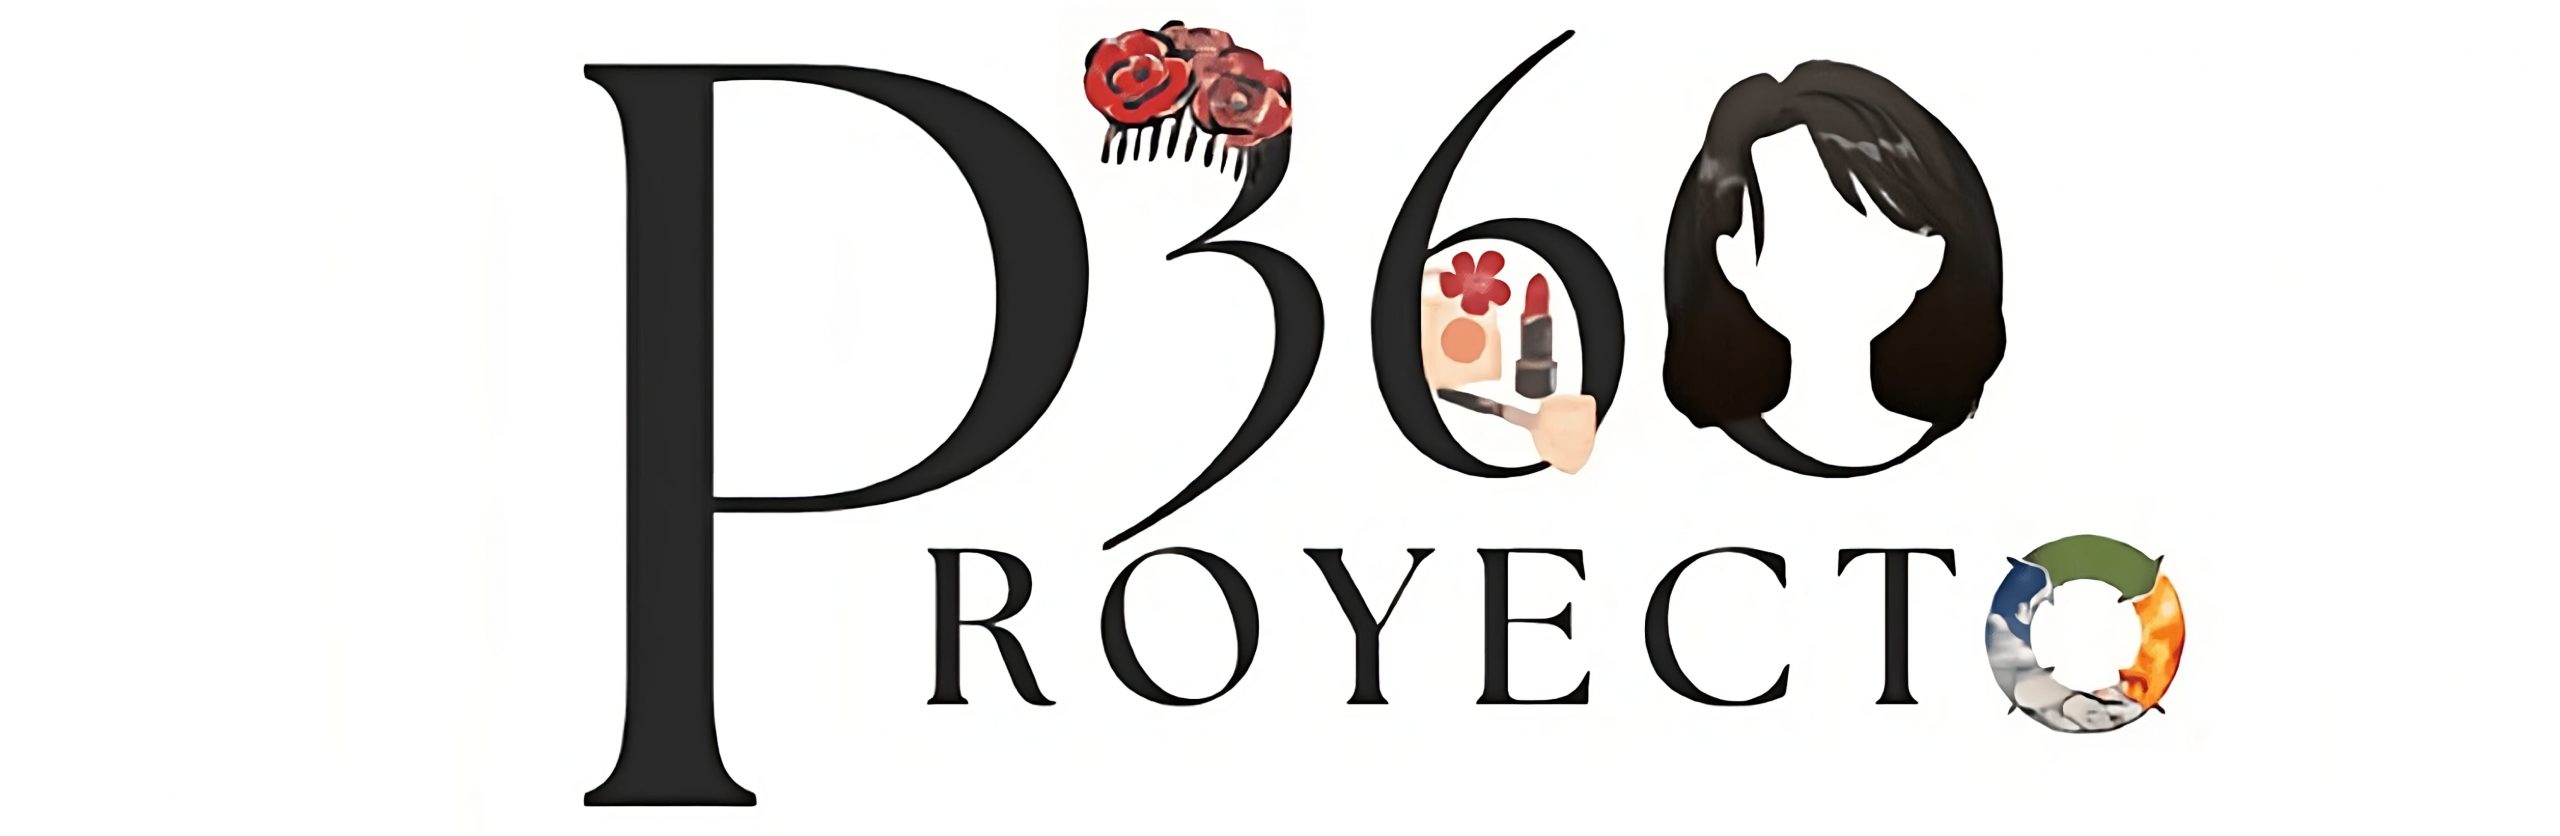 logotipo P360 Proyecto